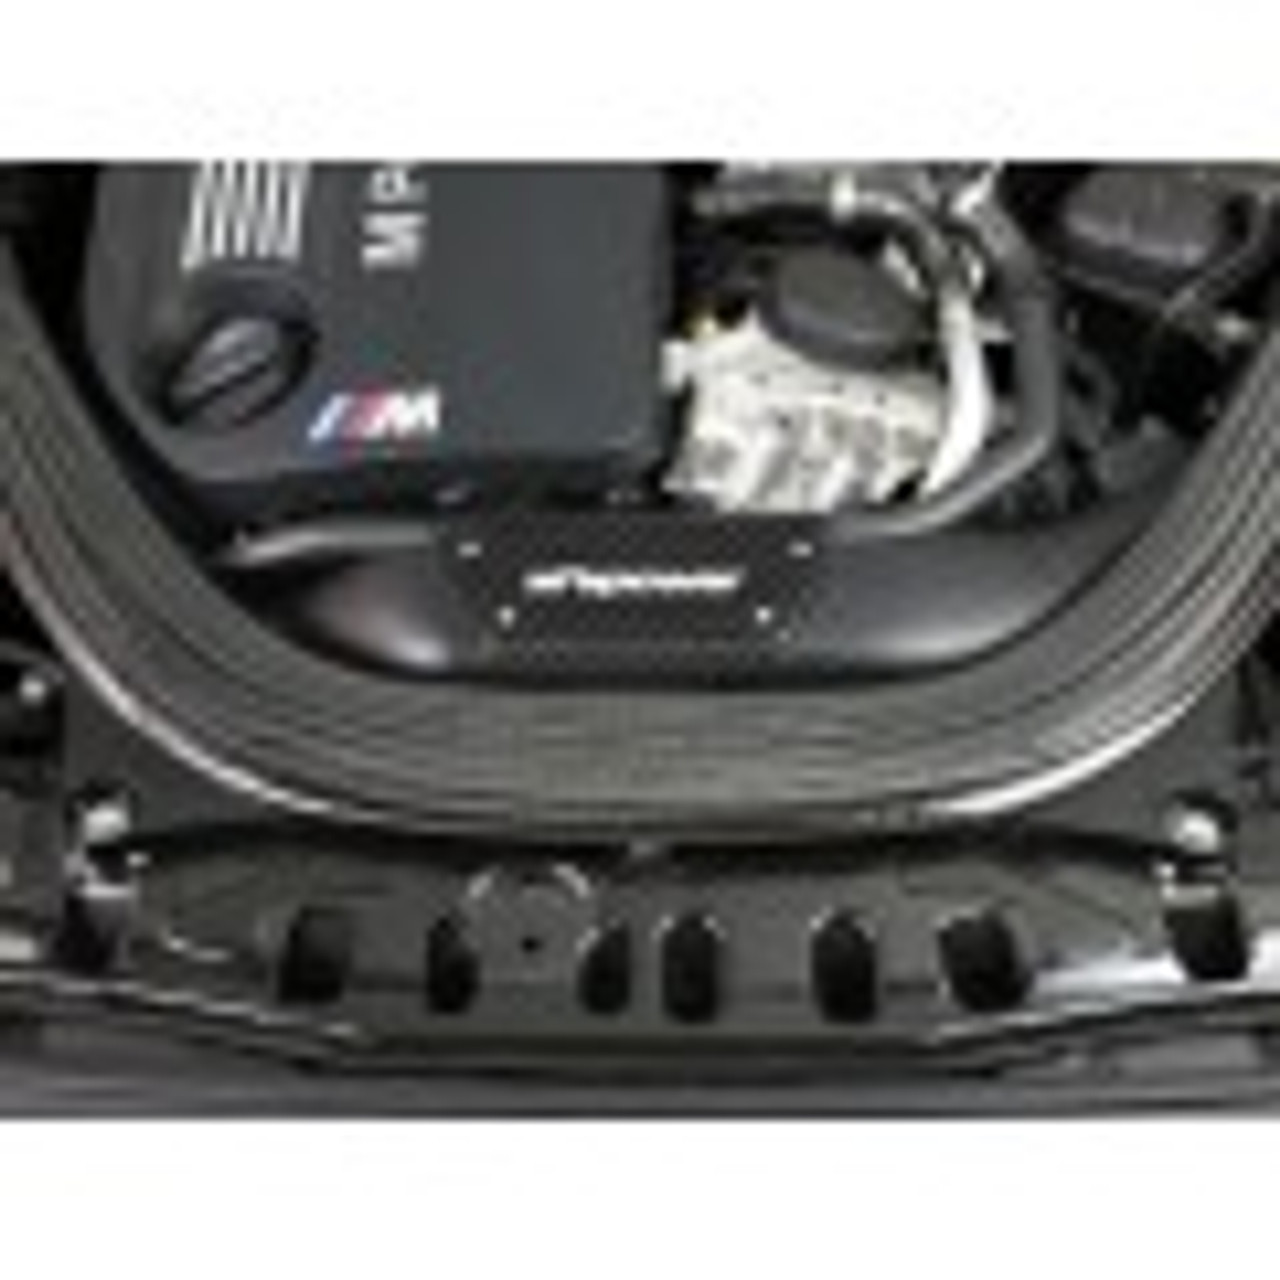 BMW Magnum FORCE Stage-2 Cold Air Intake System Carbon Fiber Trim - aFe POWER 54-13032CC